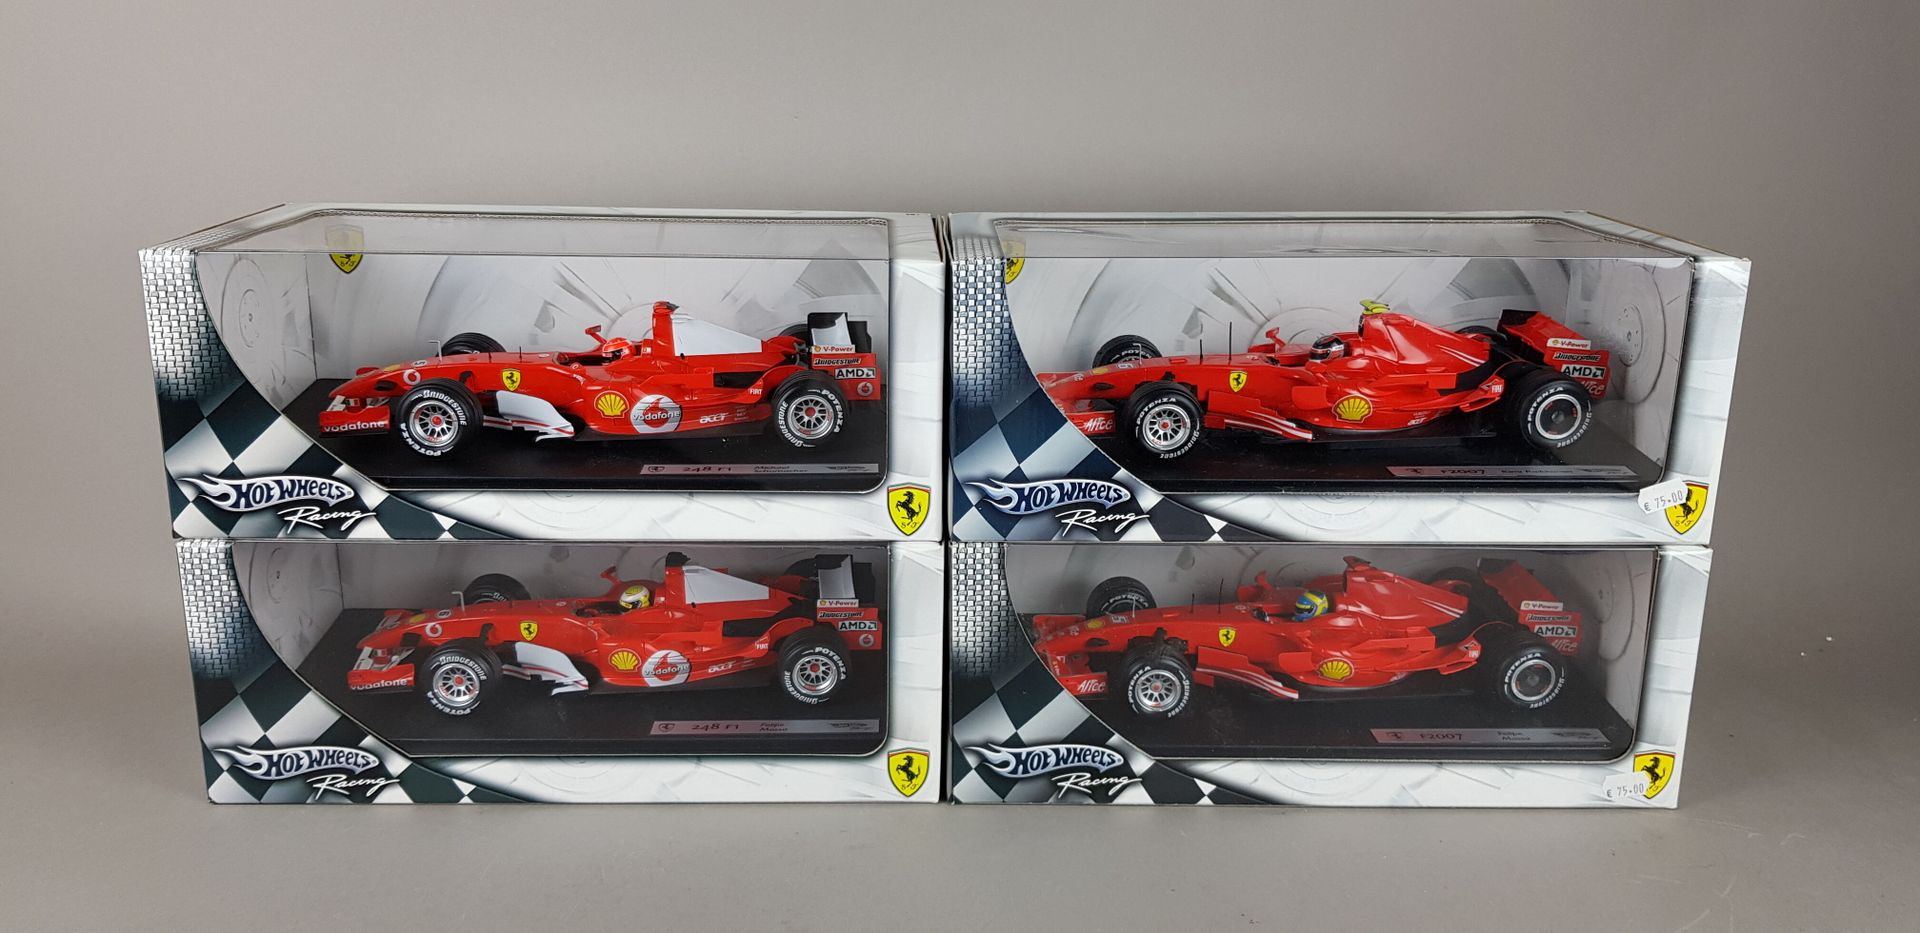 Null HOT WHEELS - FOUR Ferrari escala 1/18:

1x F2007 Felipe Massa 

1x 248 F1 M&hellip;